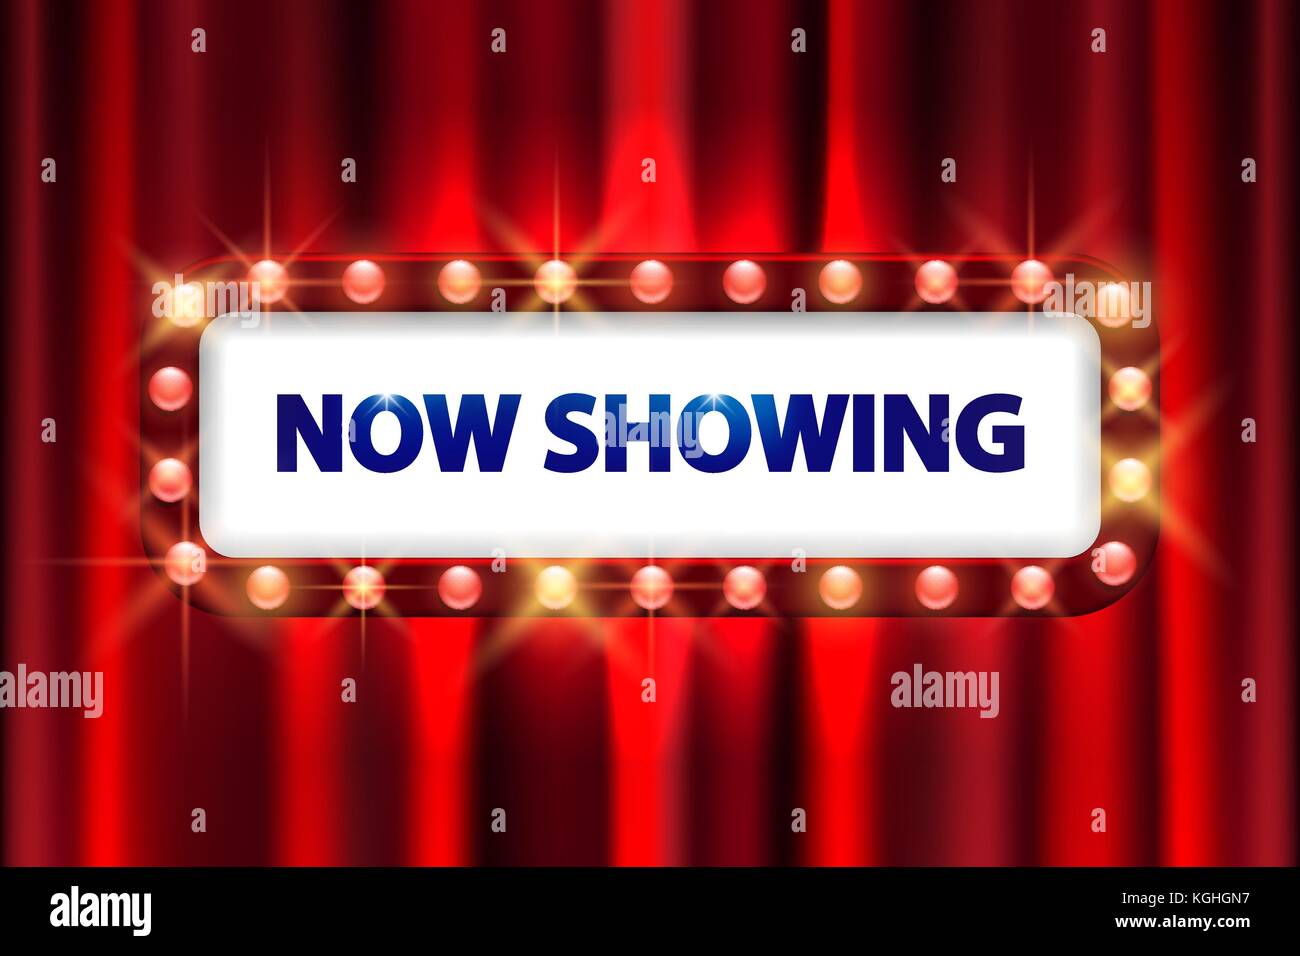 Kino film Plakat Design. Theater oder Kino Zeichen auf Vorhang mit spot light Frame. Vector Illustration Stock Vektor